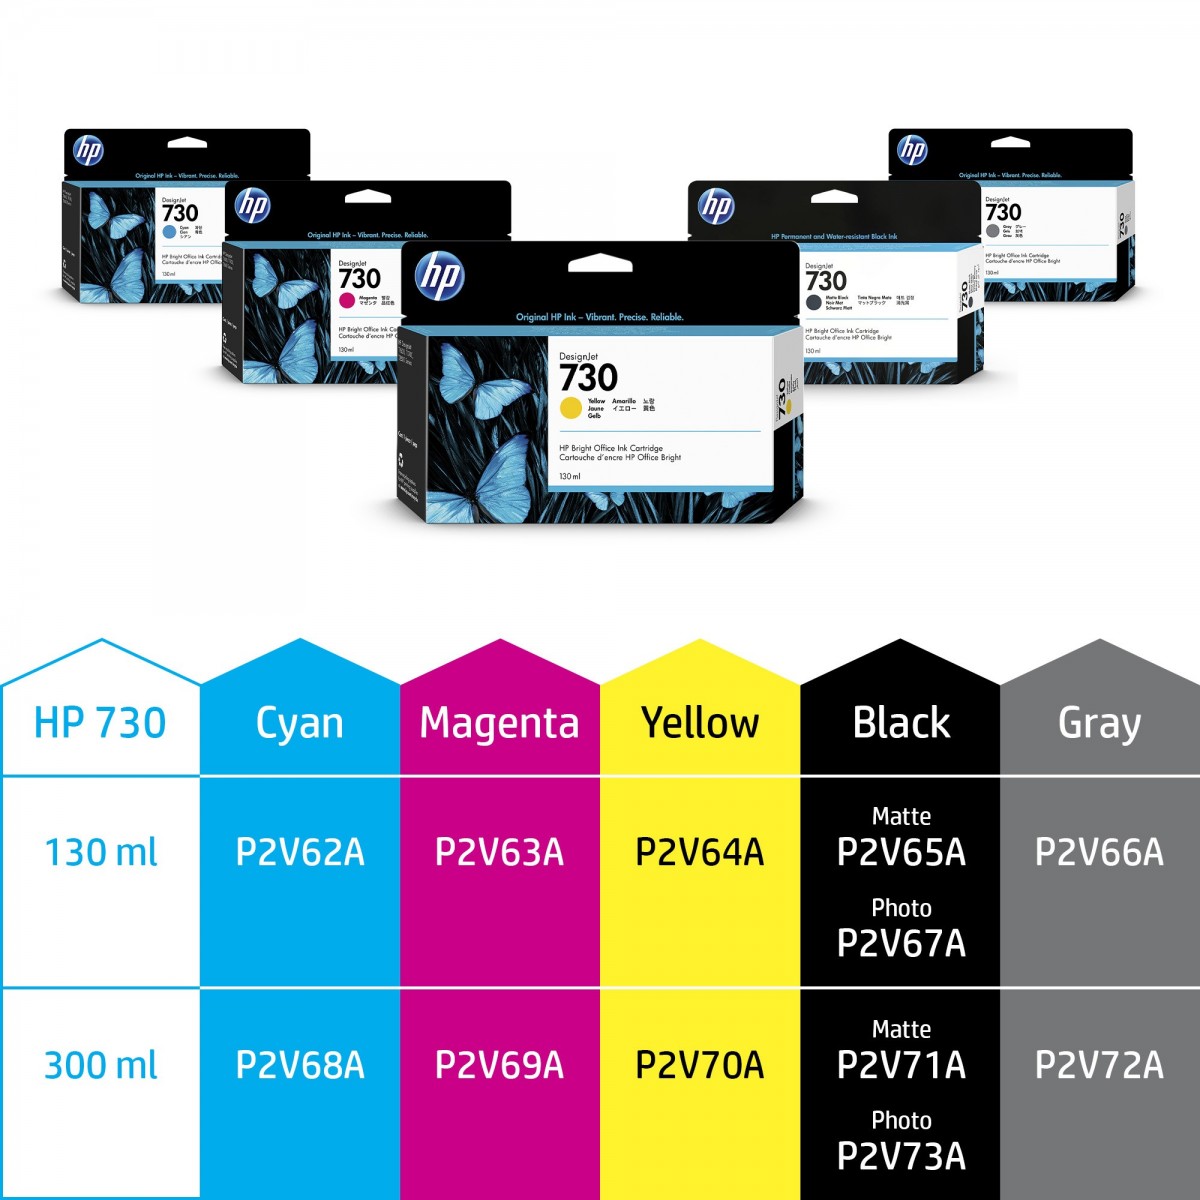 HP 730 300-ml Gray DesignJet Ink Cartridge - Dye-based ink - 300 ml - 1 pc(s)